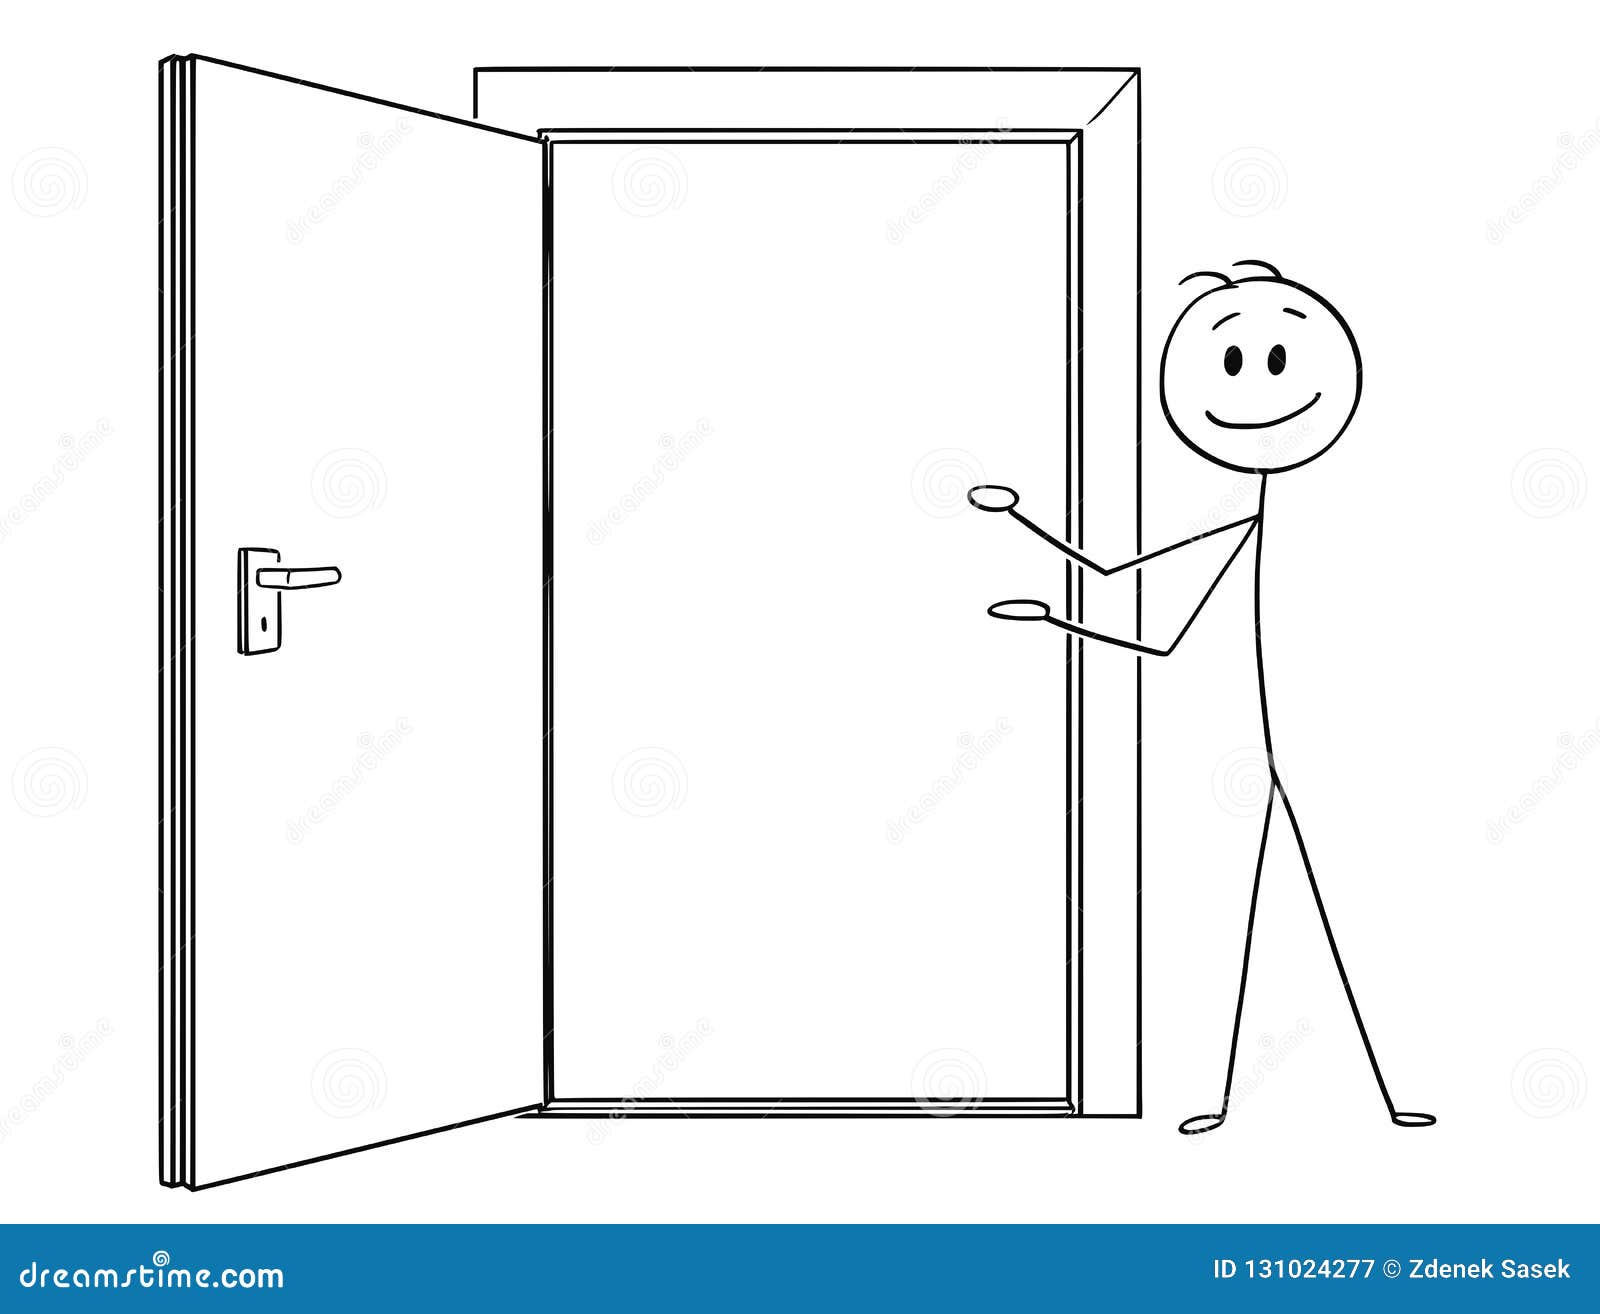 cartoon of man or businessman inviting to go through open door